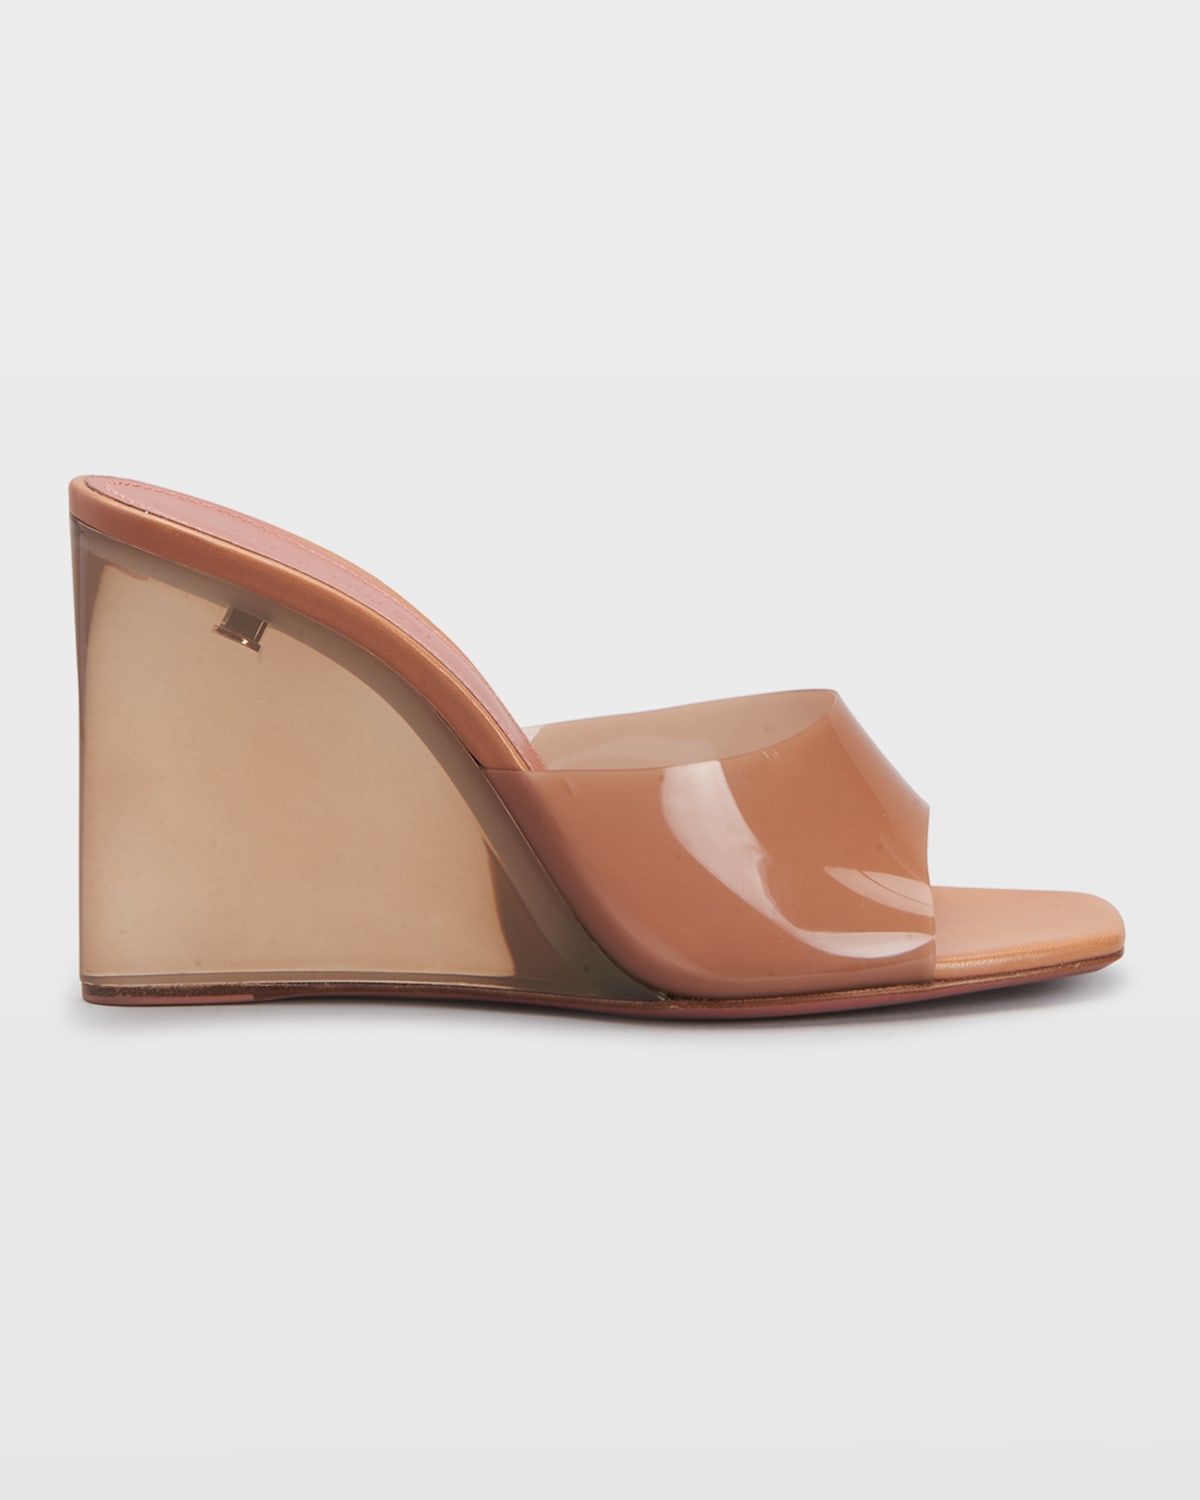 Amina Muaddi Lupita Glass-Wedge Slide Sandals